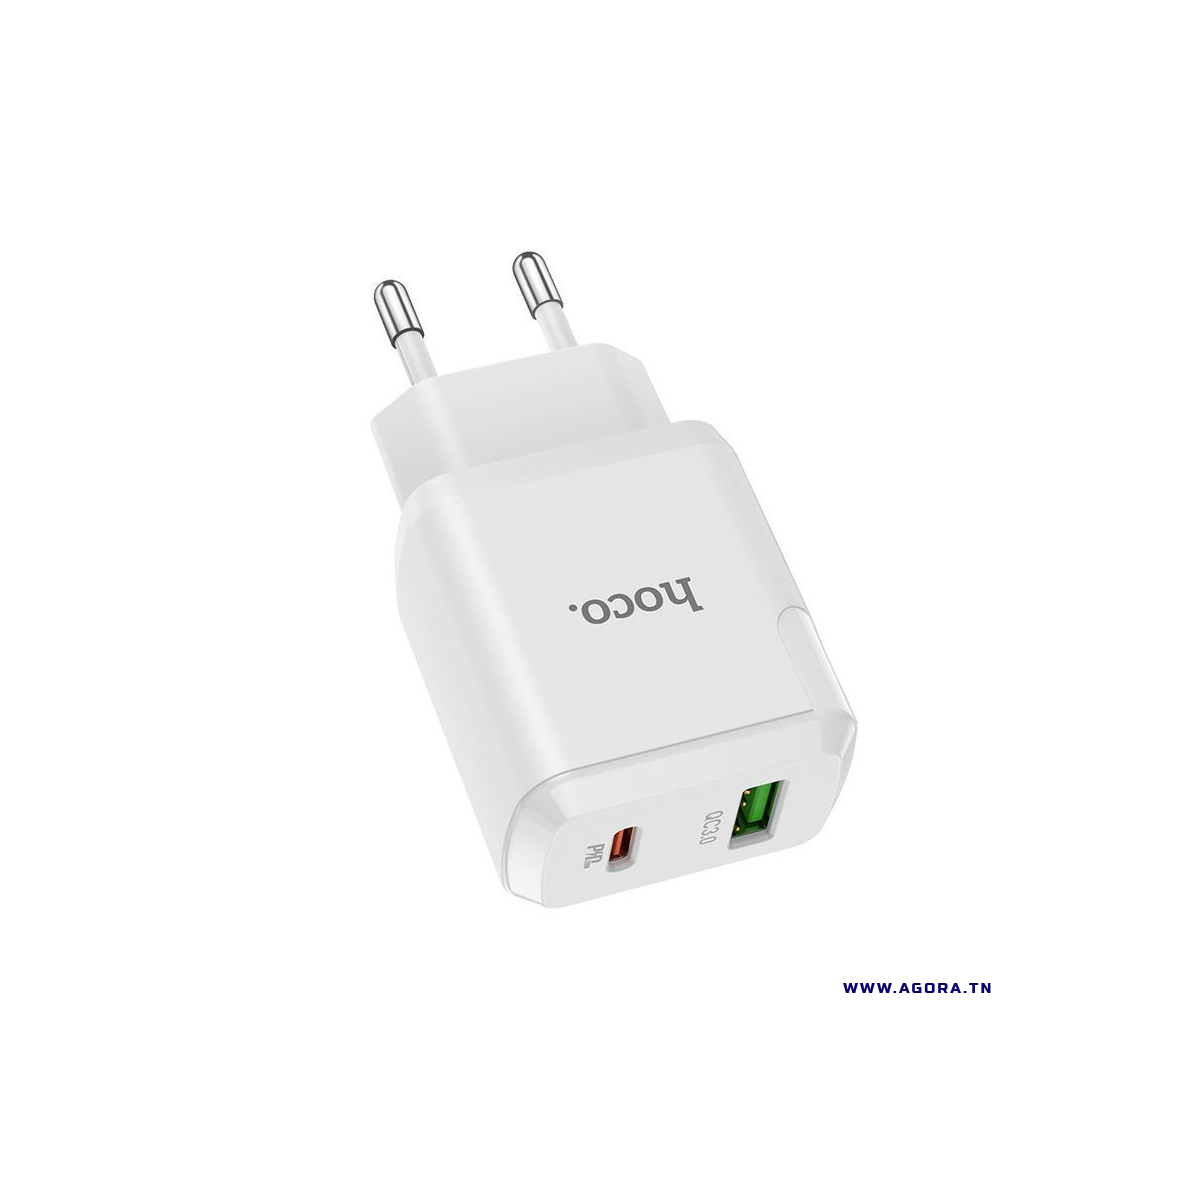 TÊTE CHARGEUR HOCO N5 2 PORT USB TO TYPE-C | BLANC | Agora.tn